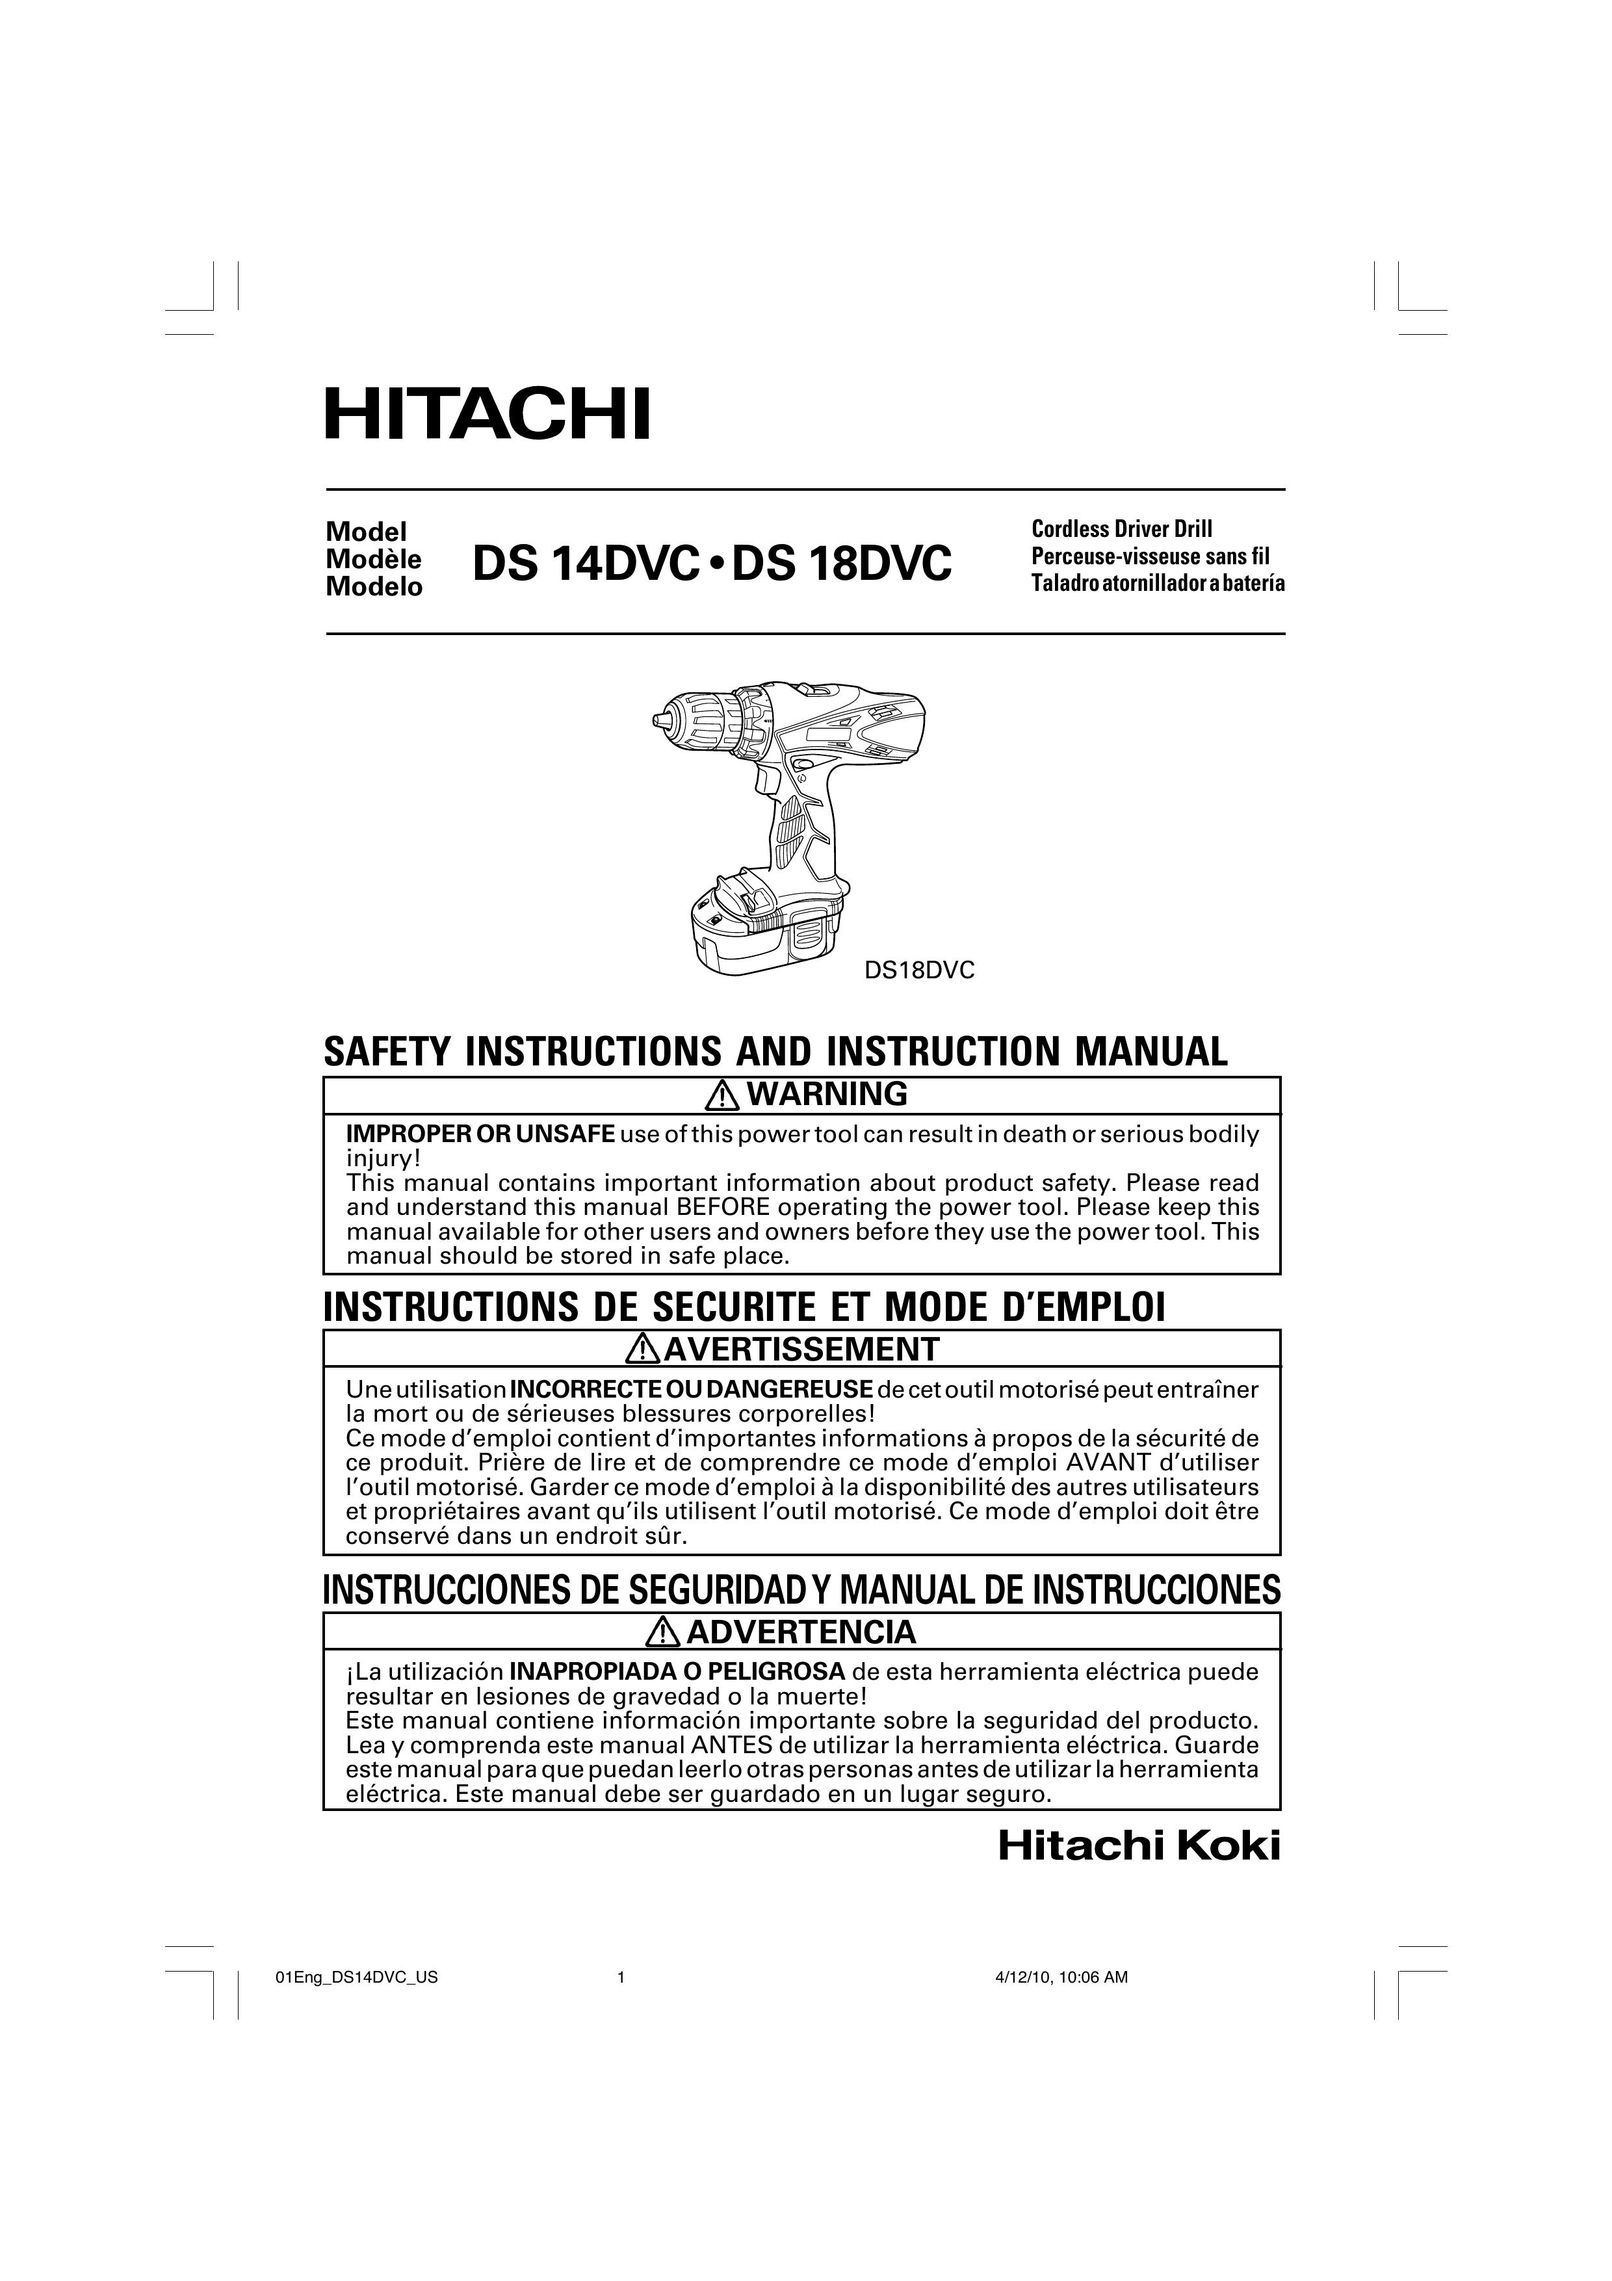 Hitachi DS 14DVC Cordless Drill User Manual